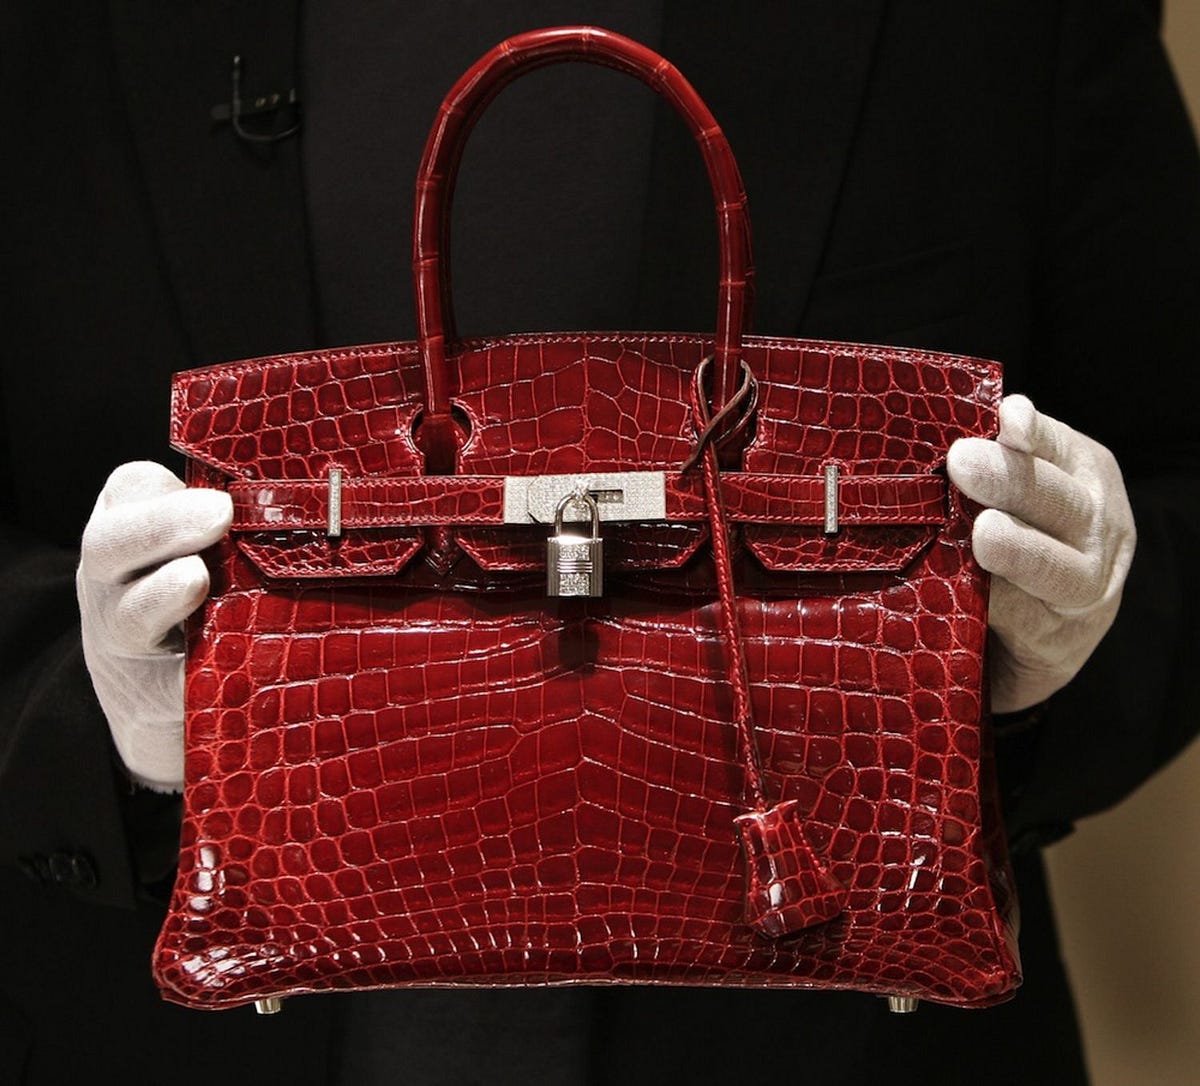 A diamond studded Hermes Birkin bag with millions of dollars of